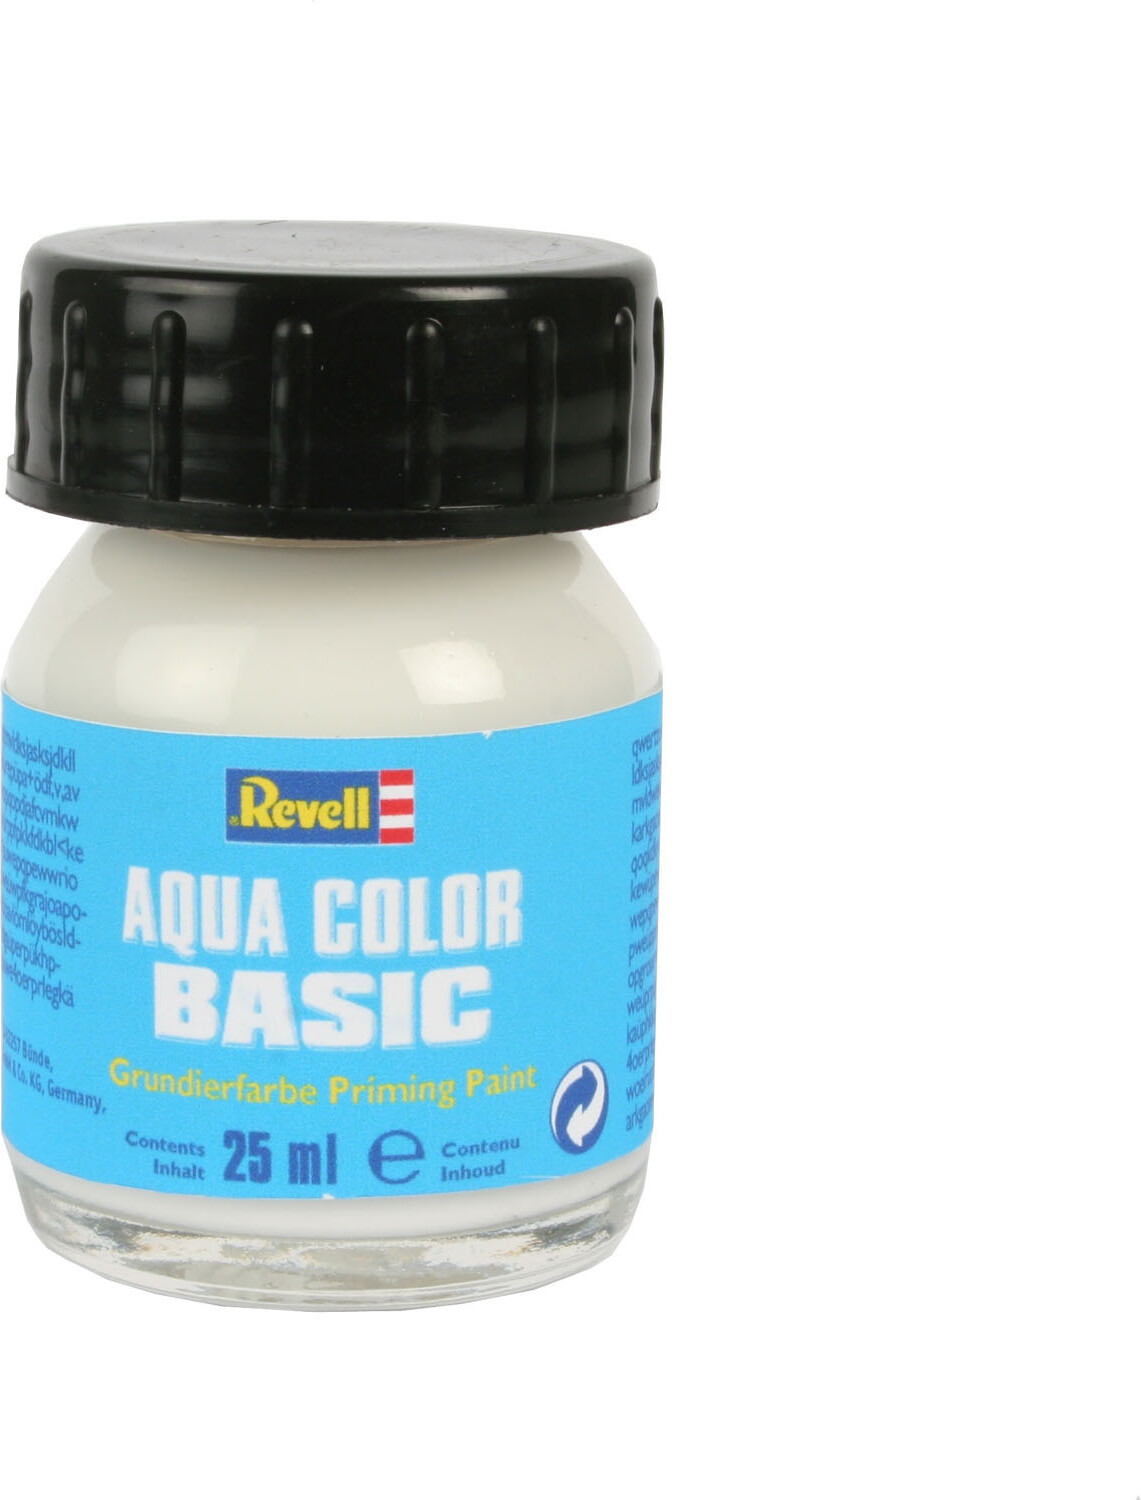 Se Revell - Aqua Color Basic Primer 25 Ml hos Gucca.dk